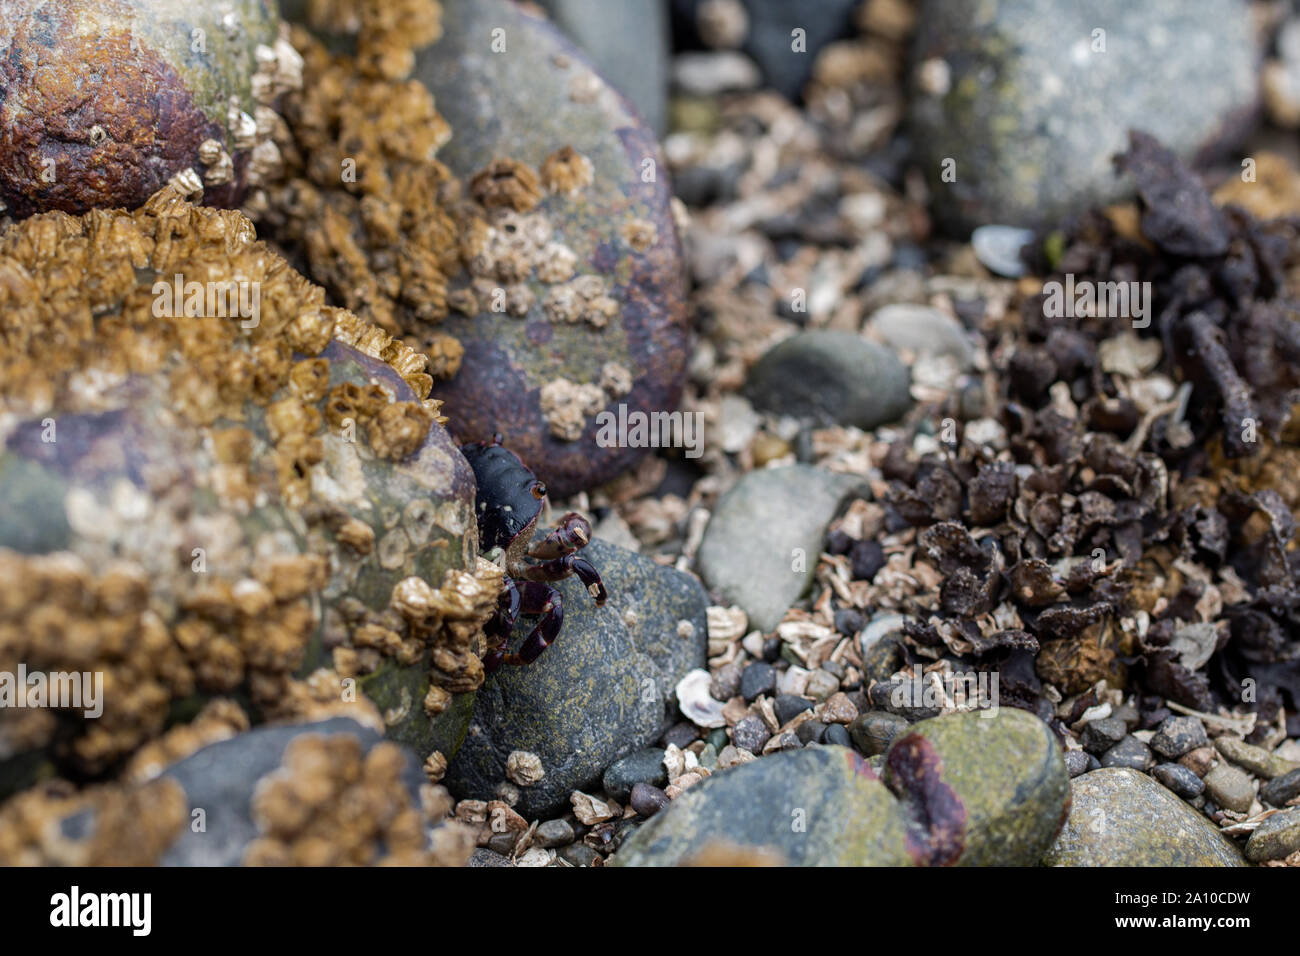 Beach craps crawling around the rocks Stock Photo